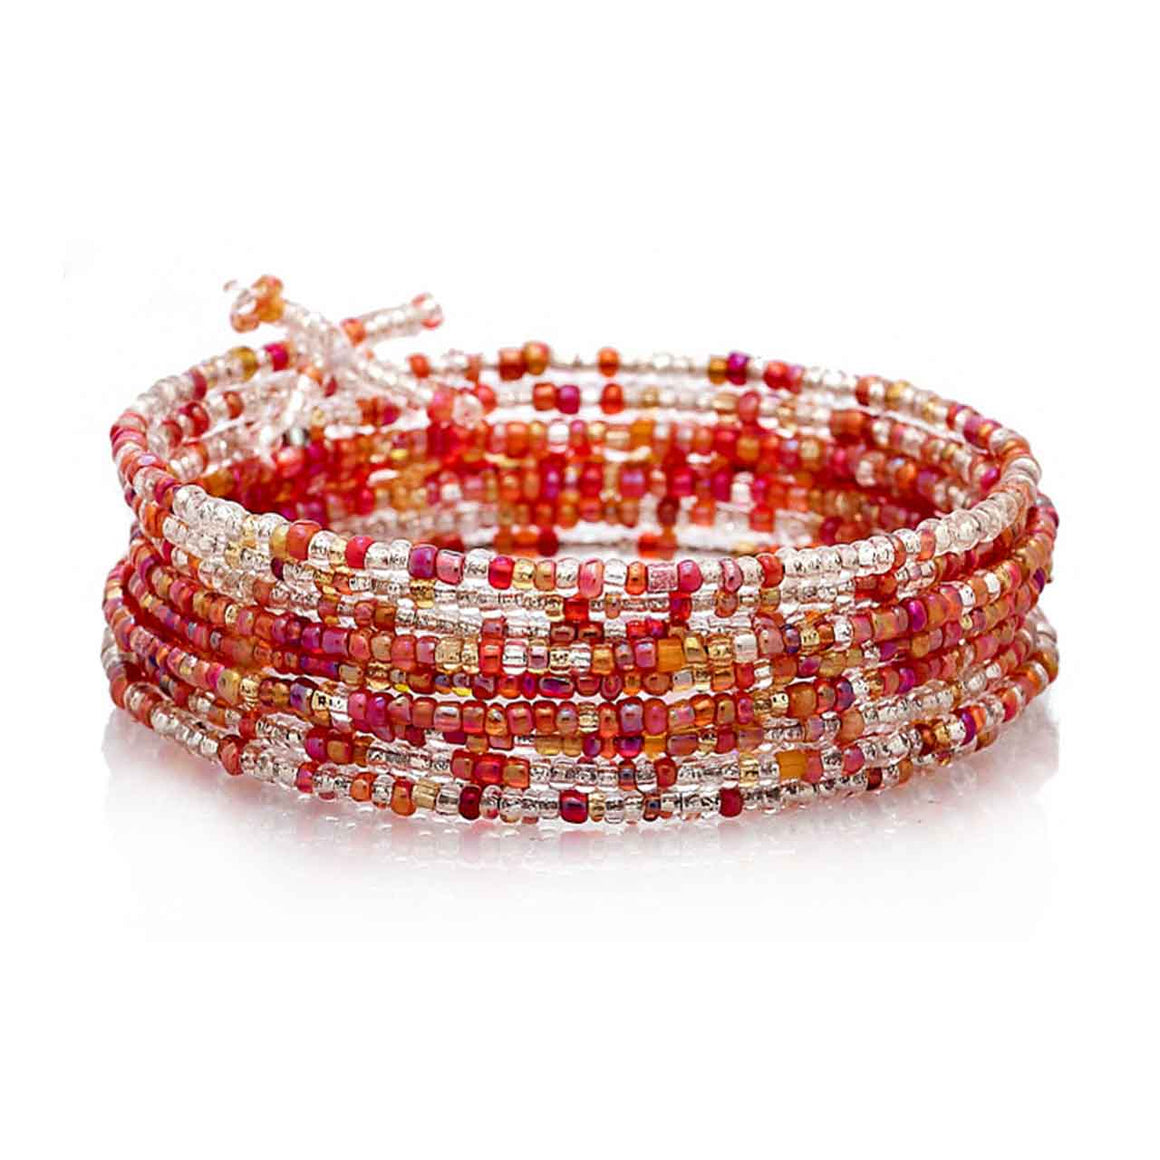 10 Row Glass Bead Bracelet - Coral Coloured